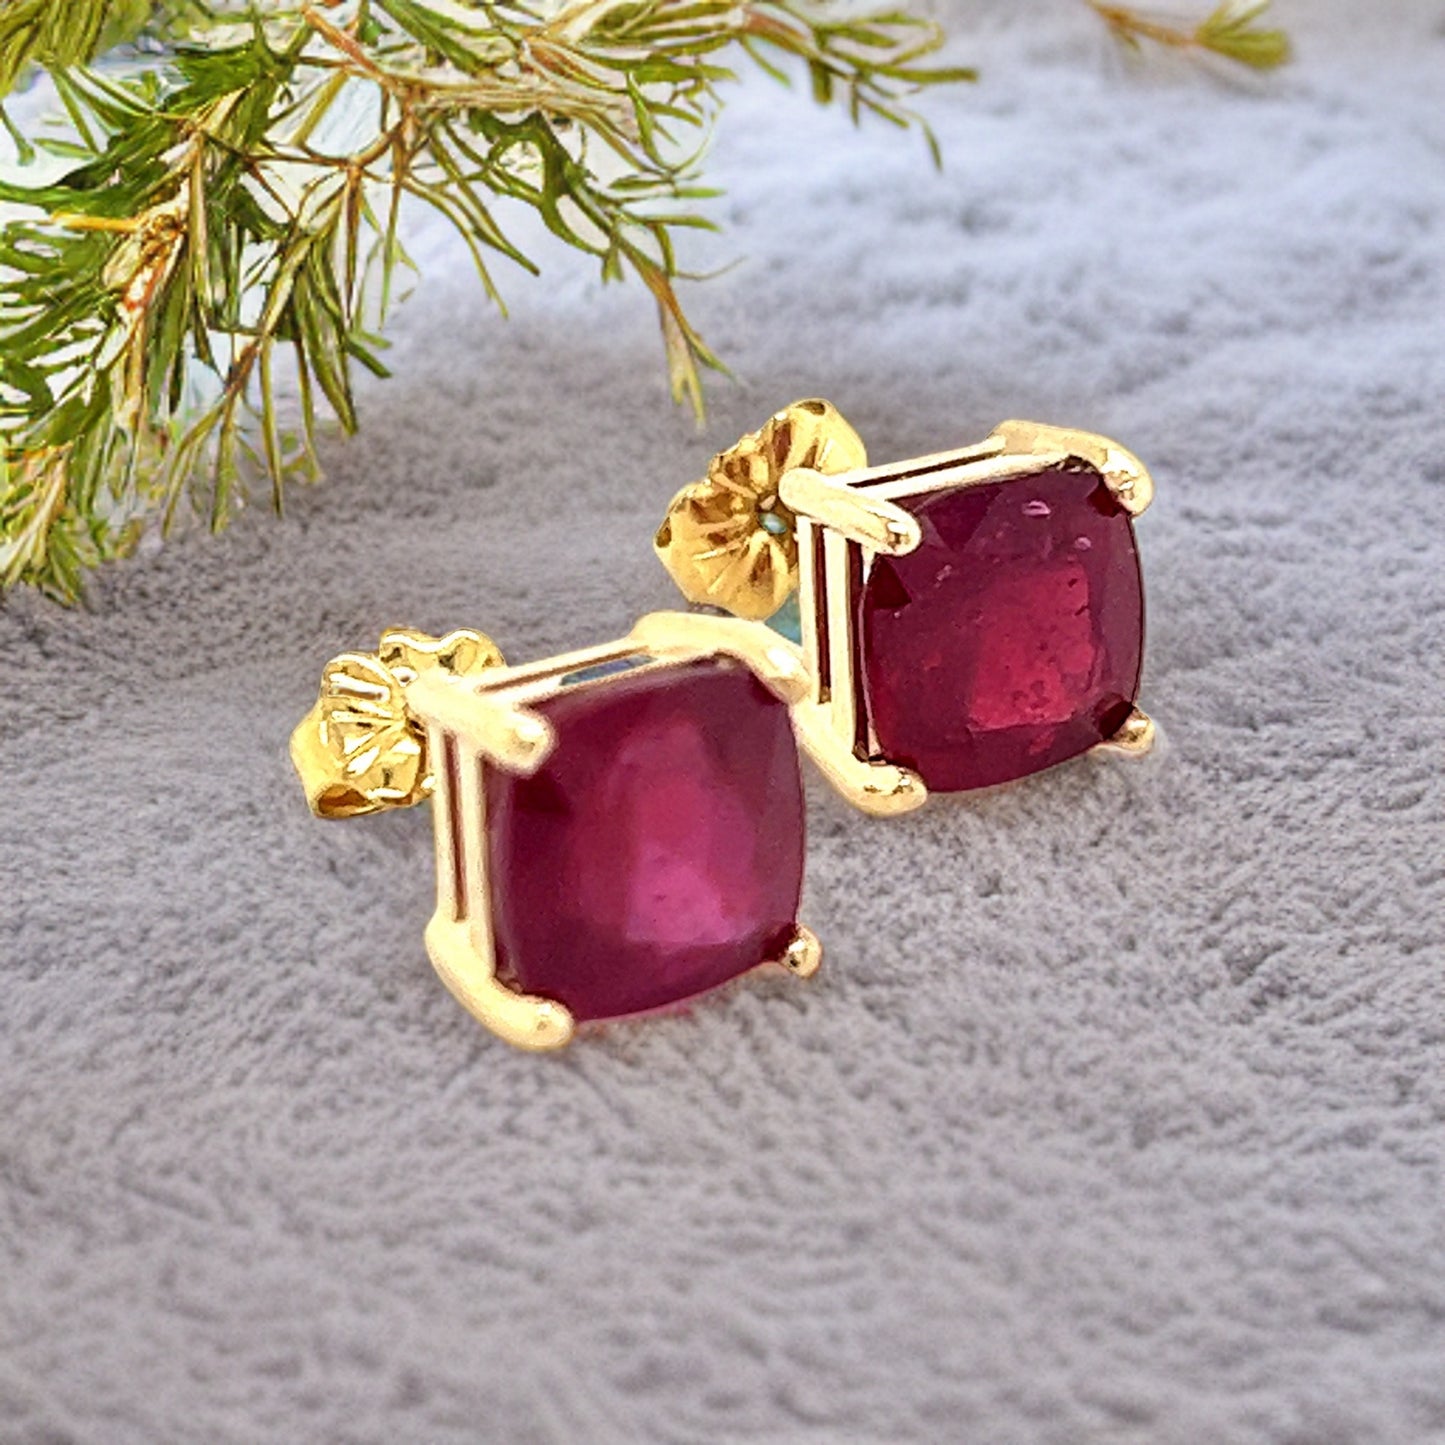 Natural Ruby Stud Earrings 14k Yellow Gold 4.18 TW Certified $799 307909 - Certified Fine Jewelry